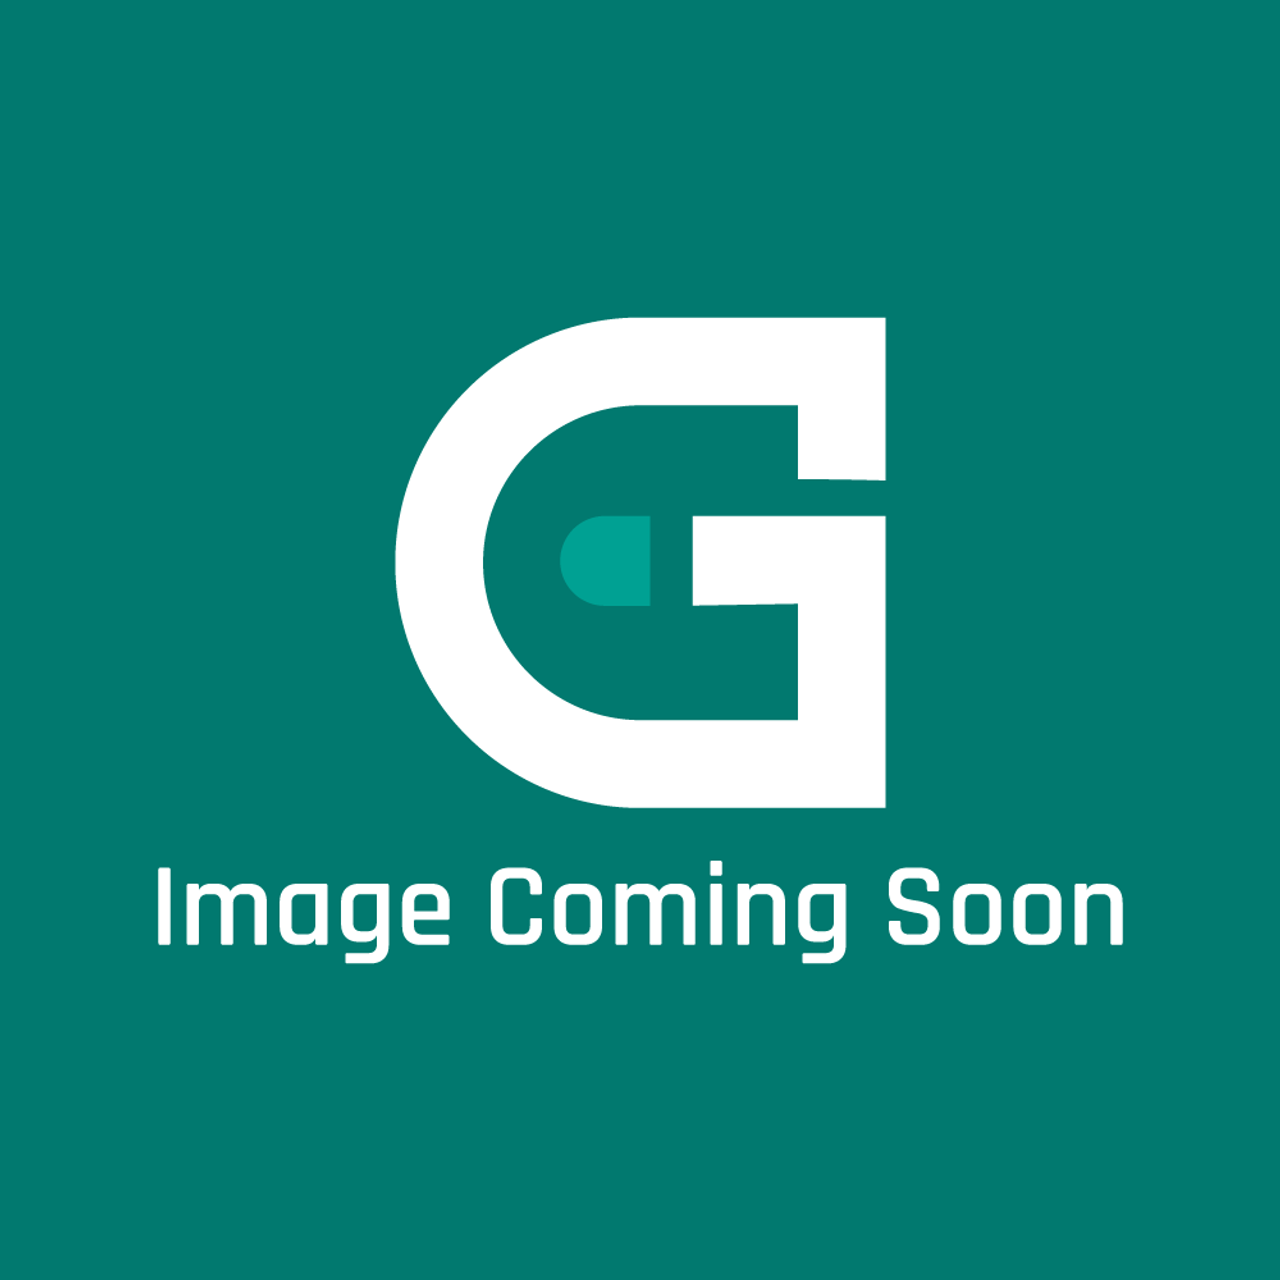 AGA Marvel RG4M998732 - S/A-Earth Lean 400Gpx - (31003) - Image Coming Soon!